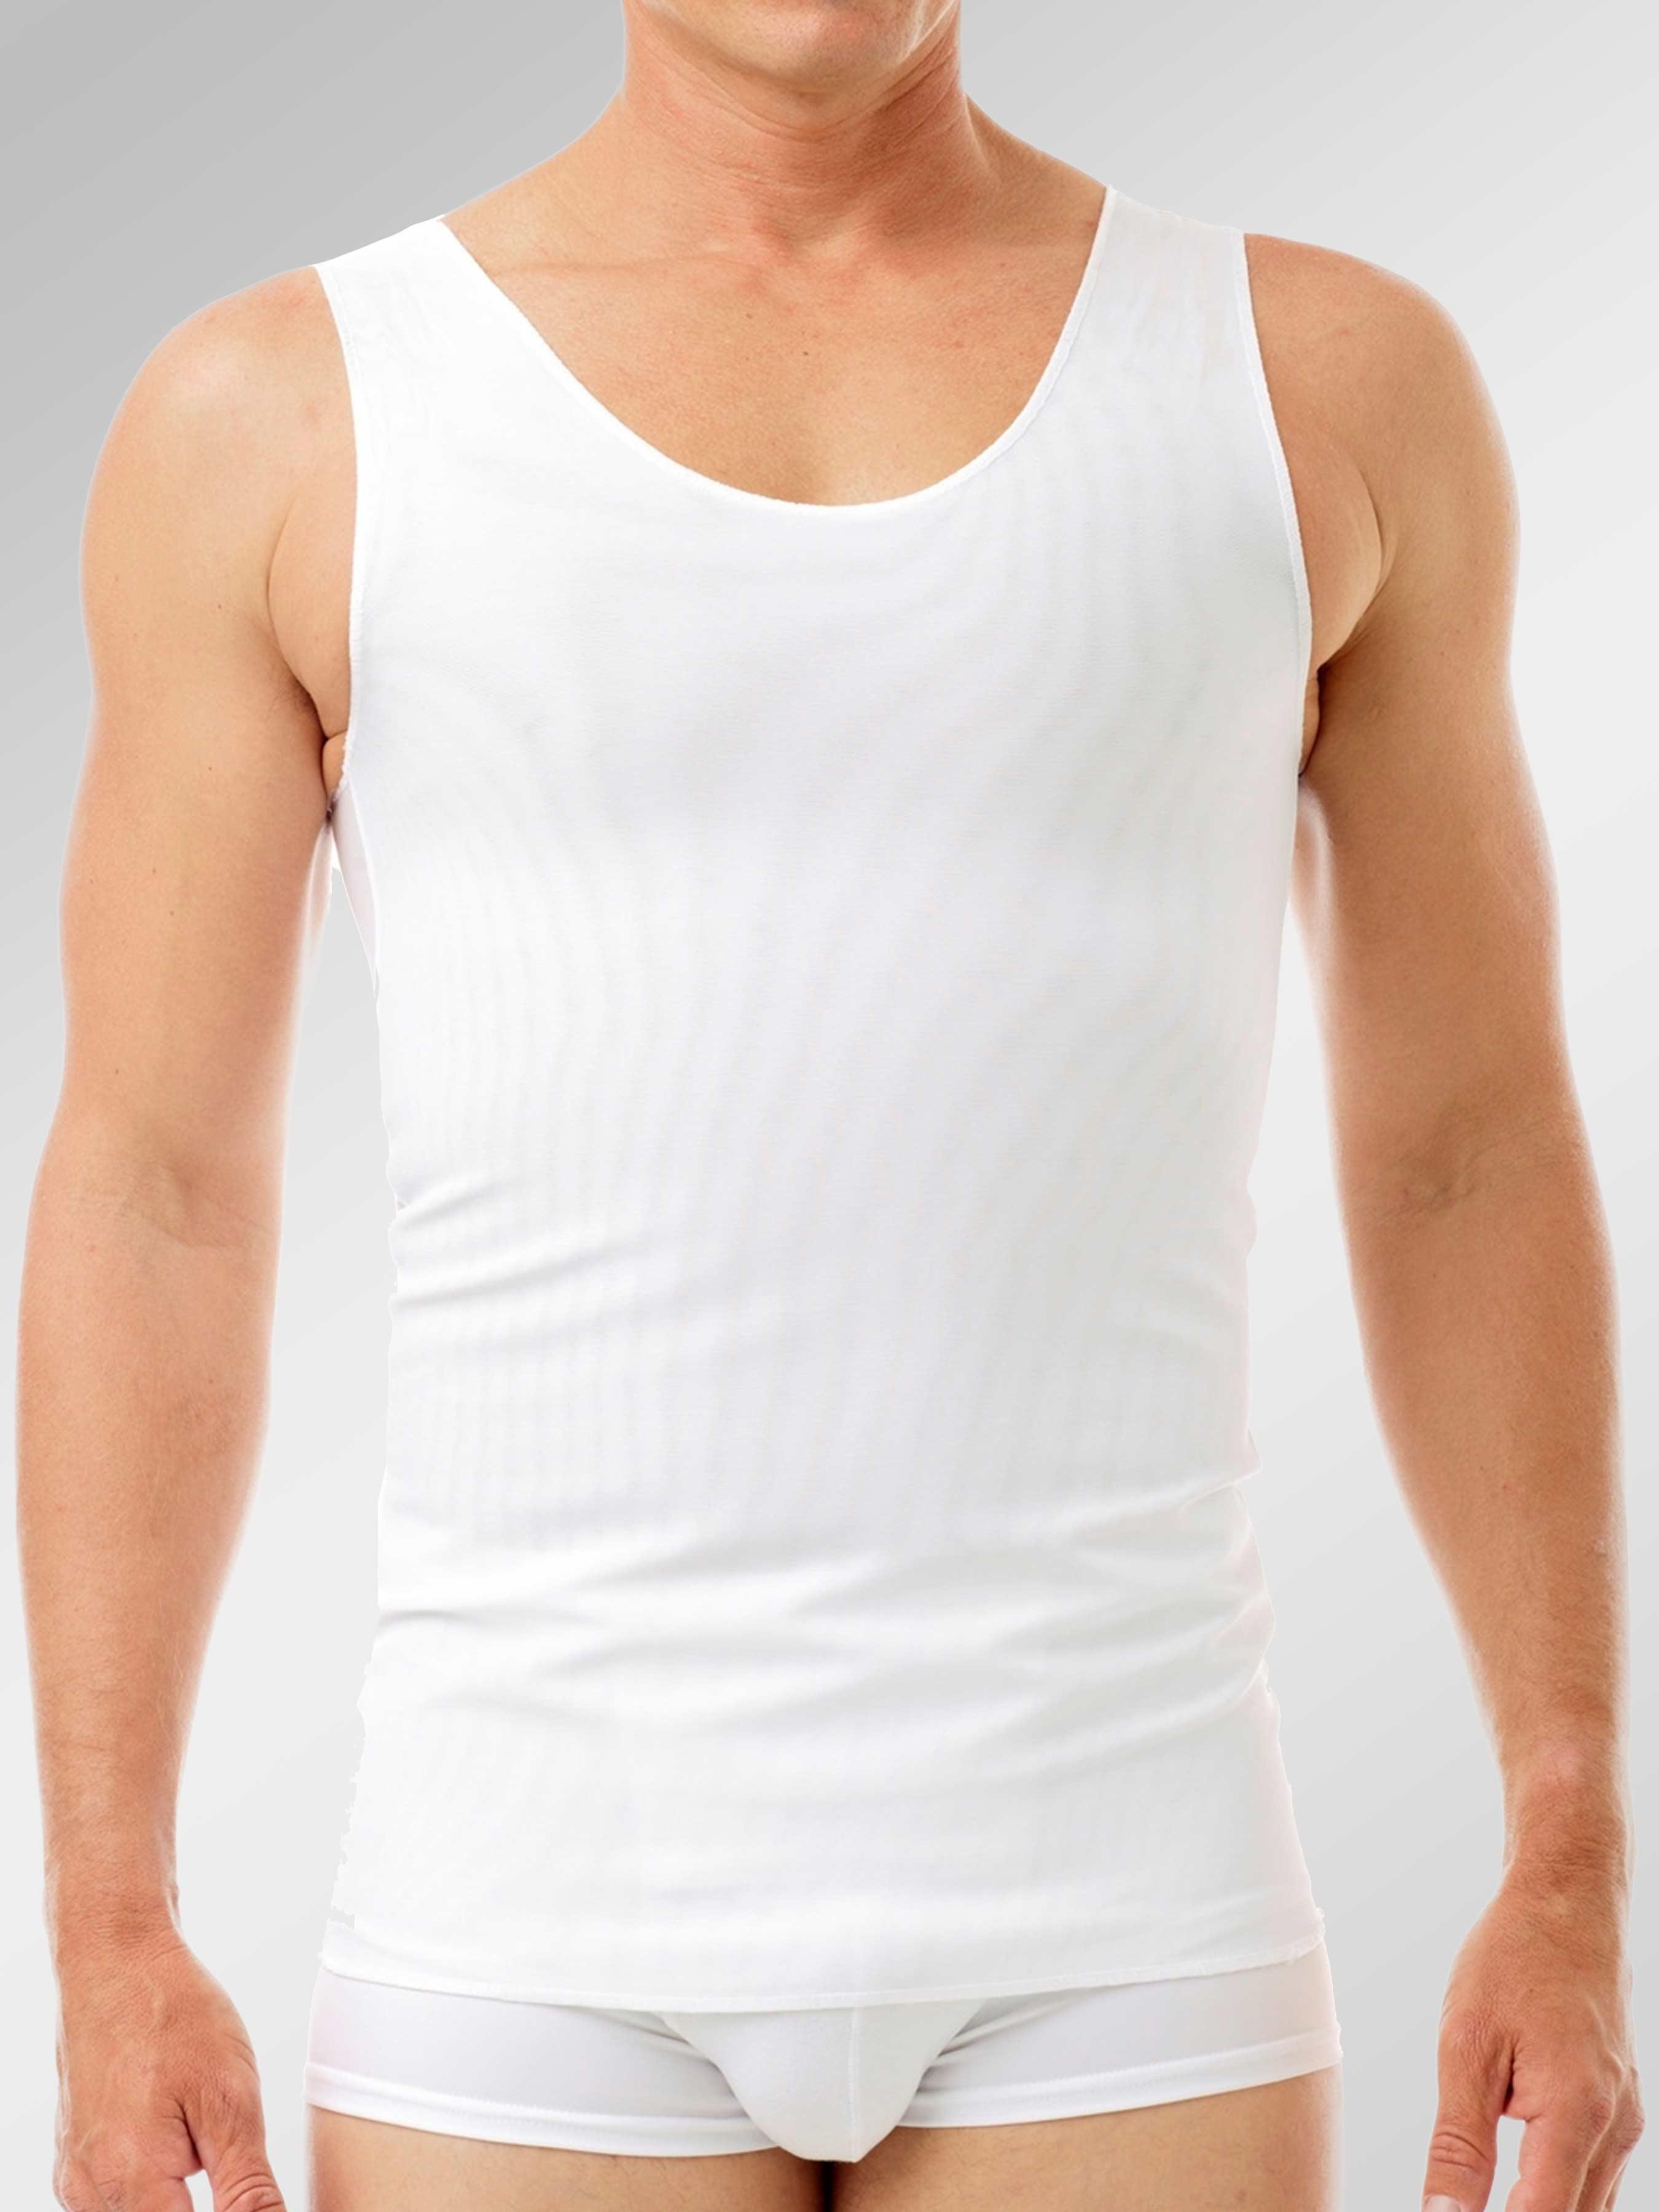 Compression Post Surgical Vest for Trans Mens. FTM Chest Binders for Trans  Men by Underworks